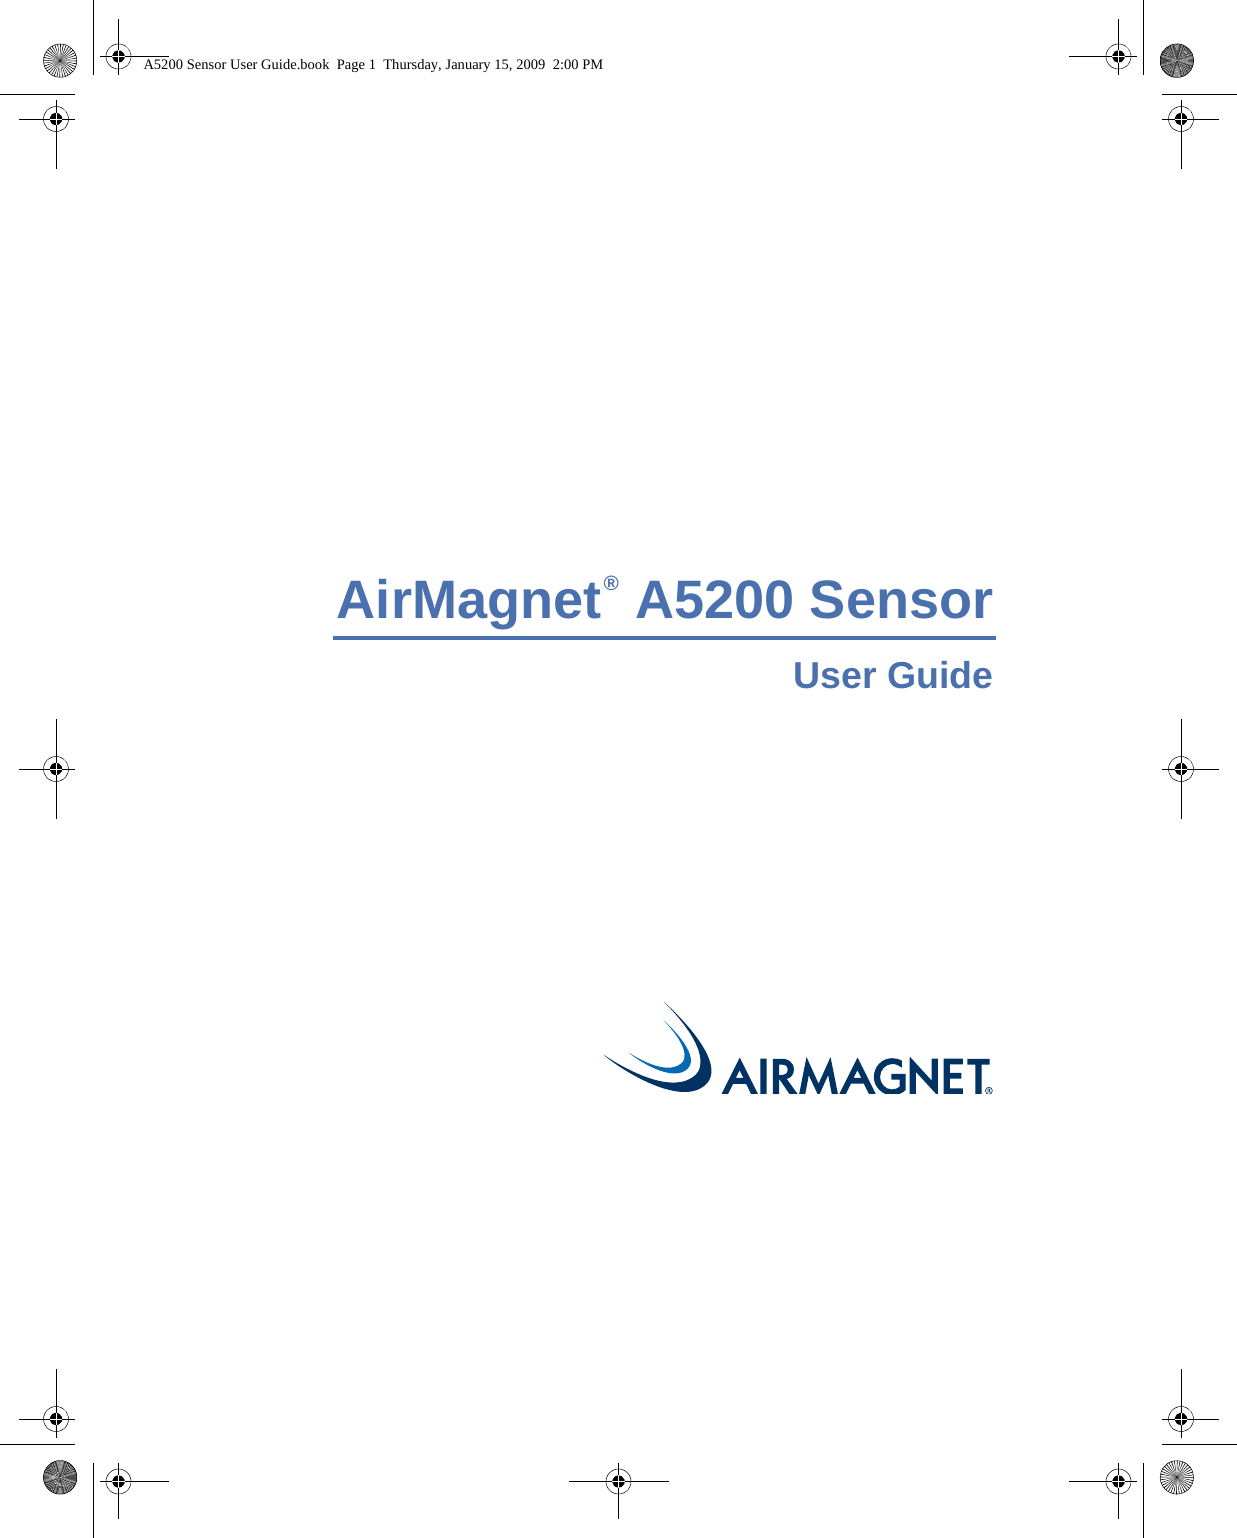 AirMagnet  A5200 Sensor User Guide®A5200 Sensor User Guide.book  Page 1  Thursday, January 15, 2009  2:00 PM